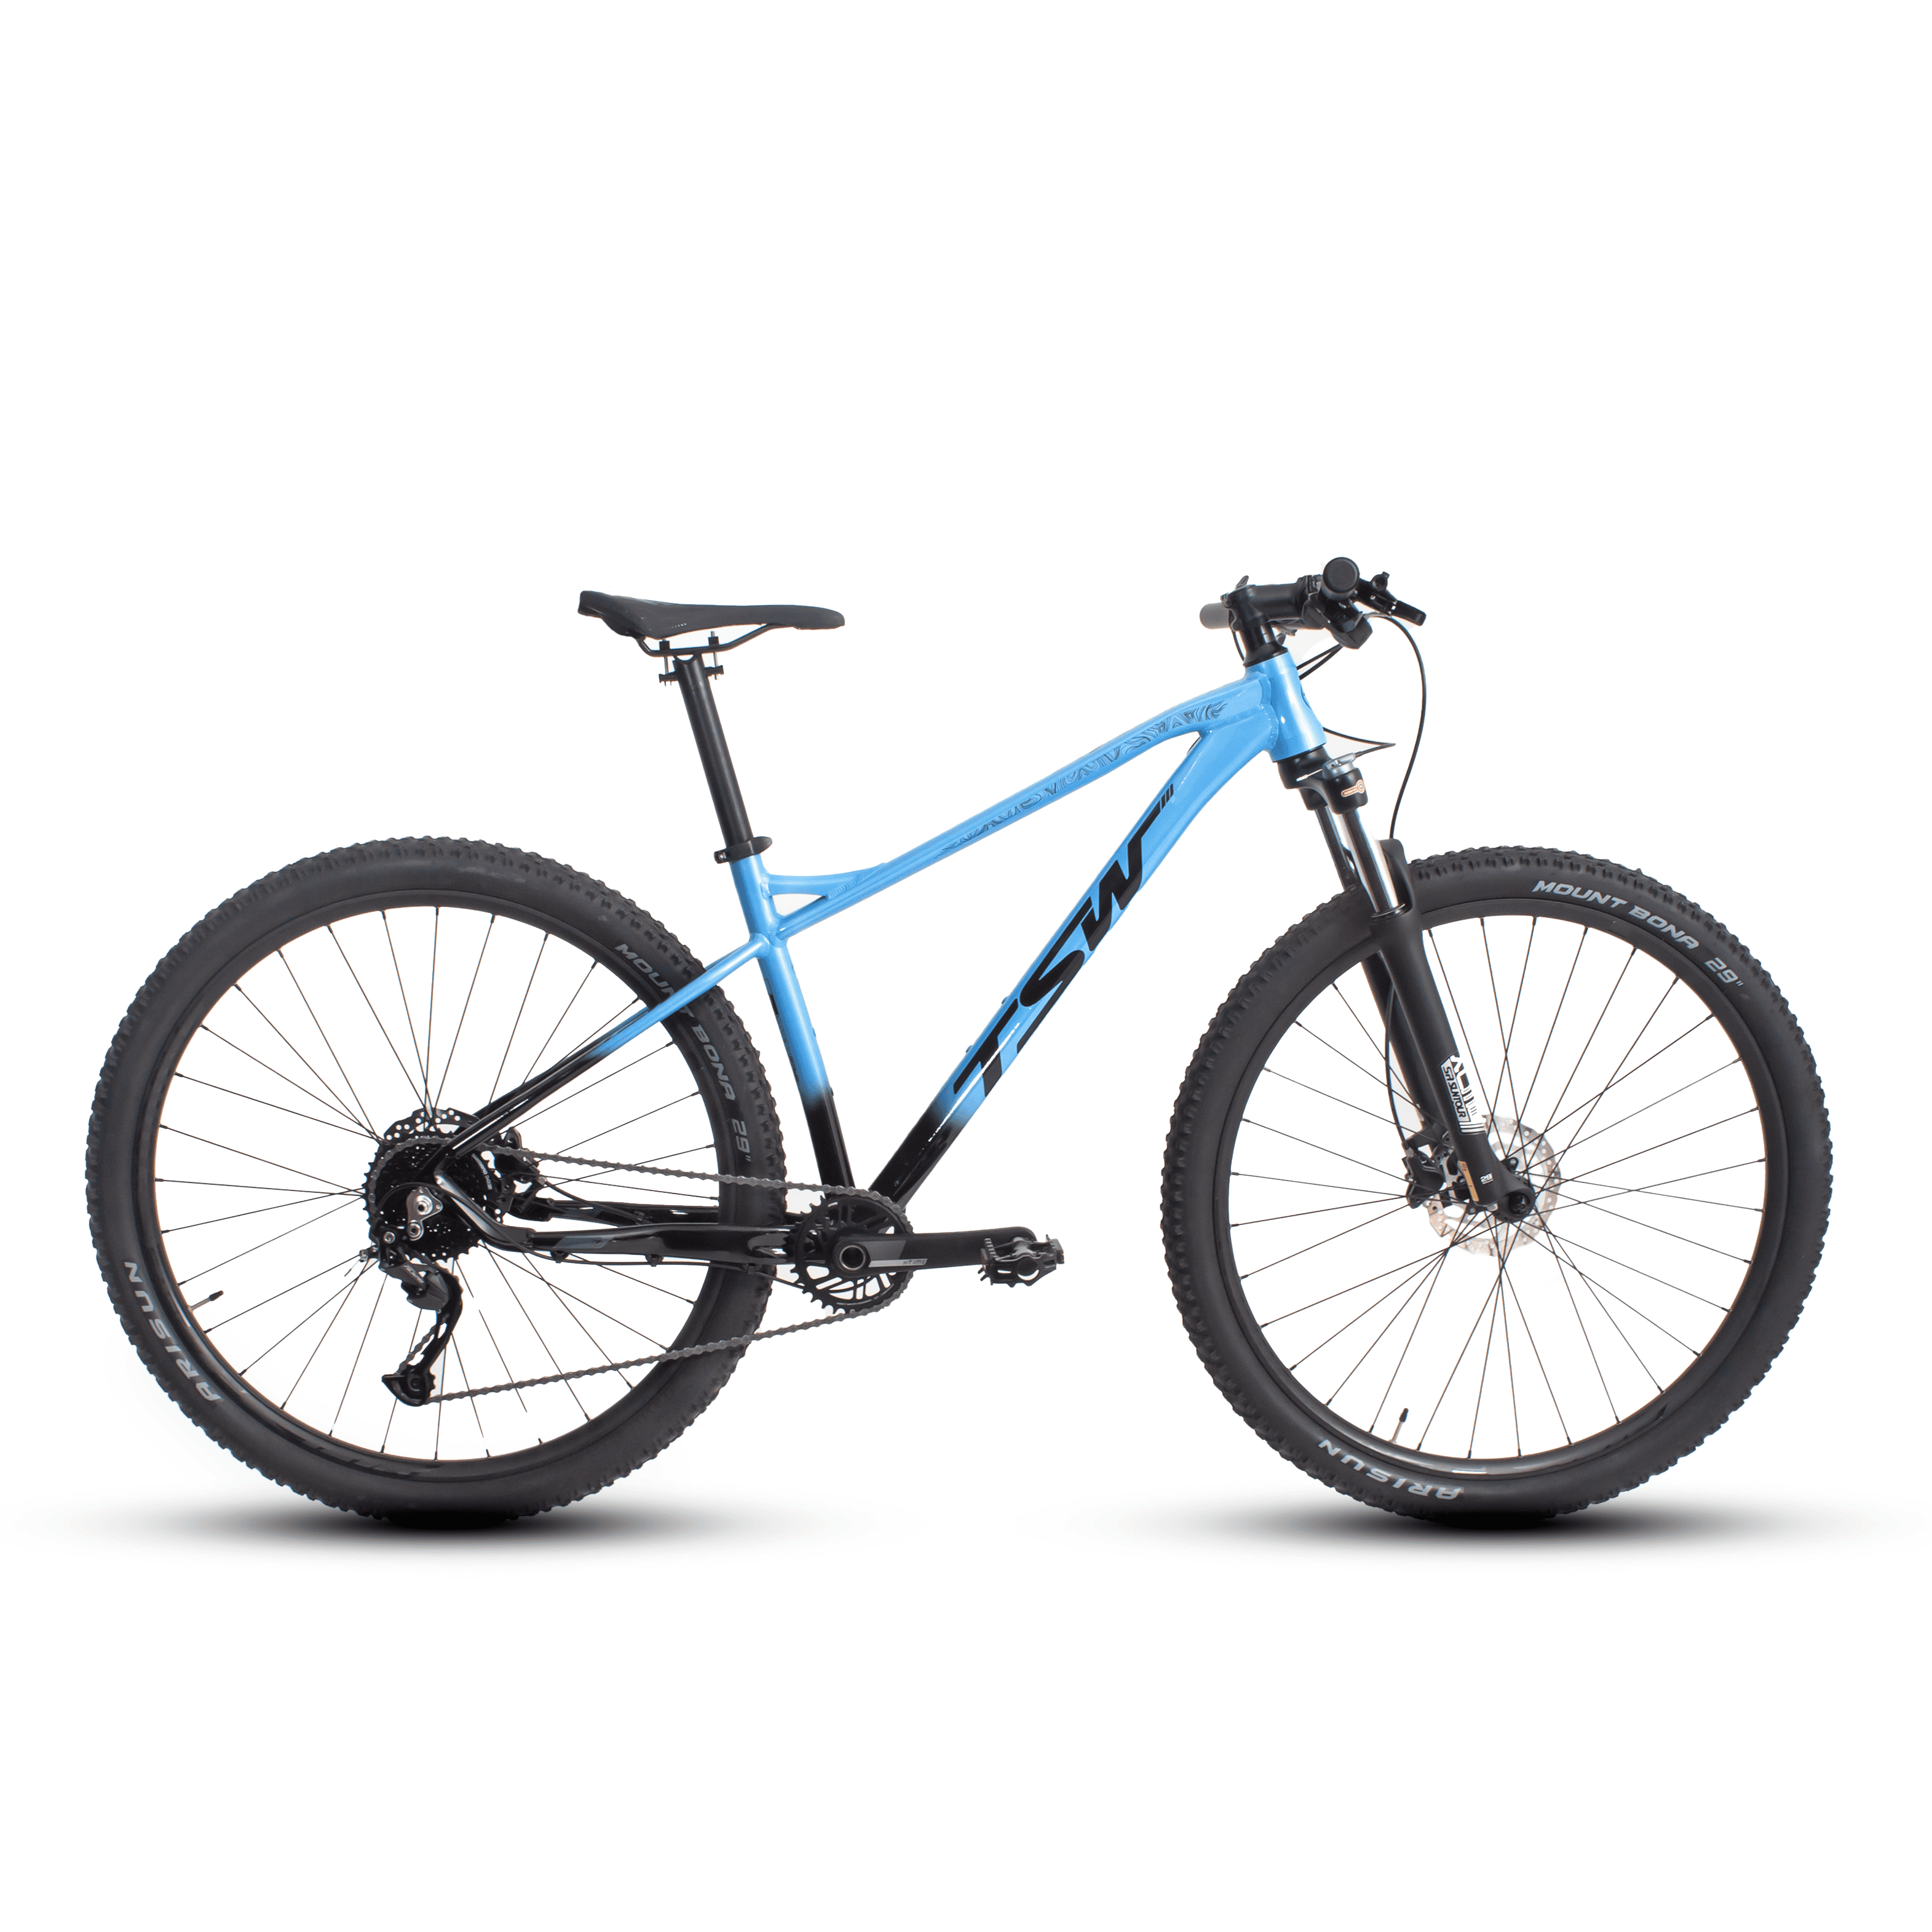 Bicicleta TSW Stamina | SR Suntour - 17", Azul/Preto